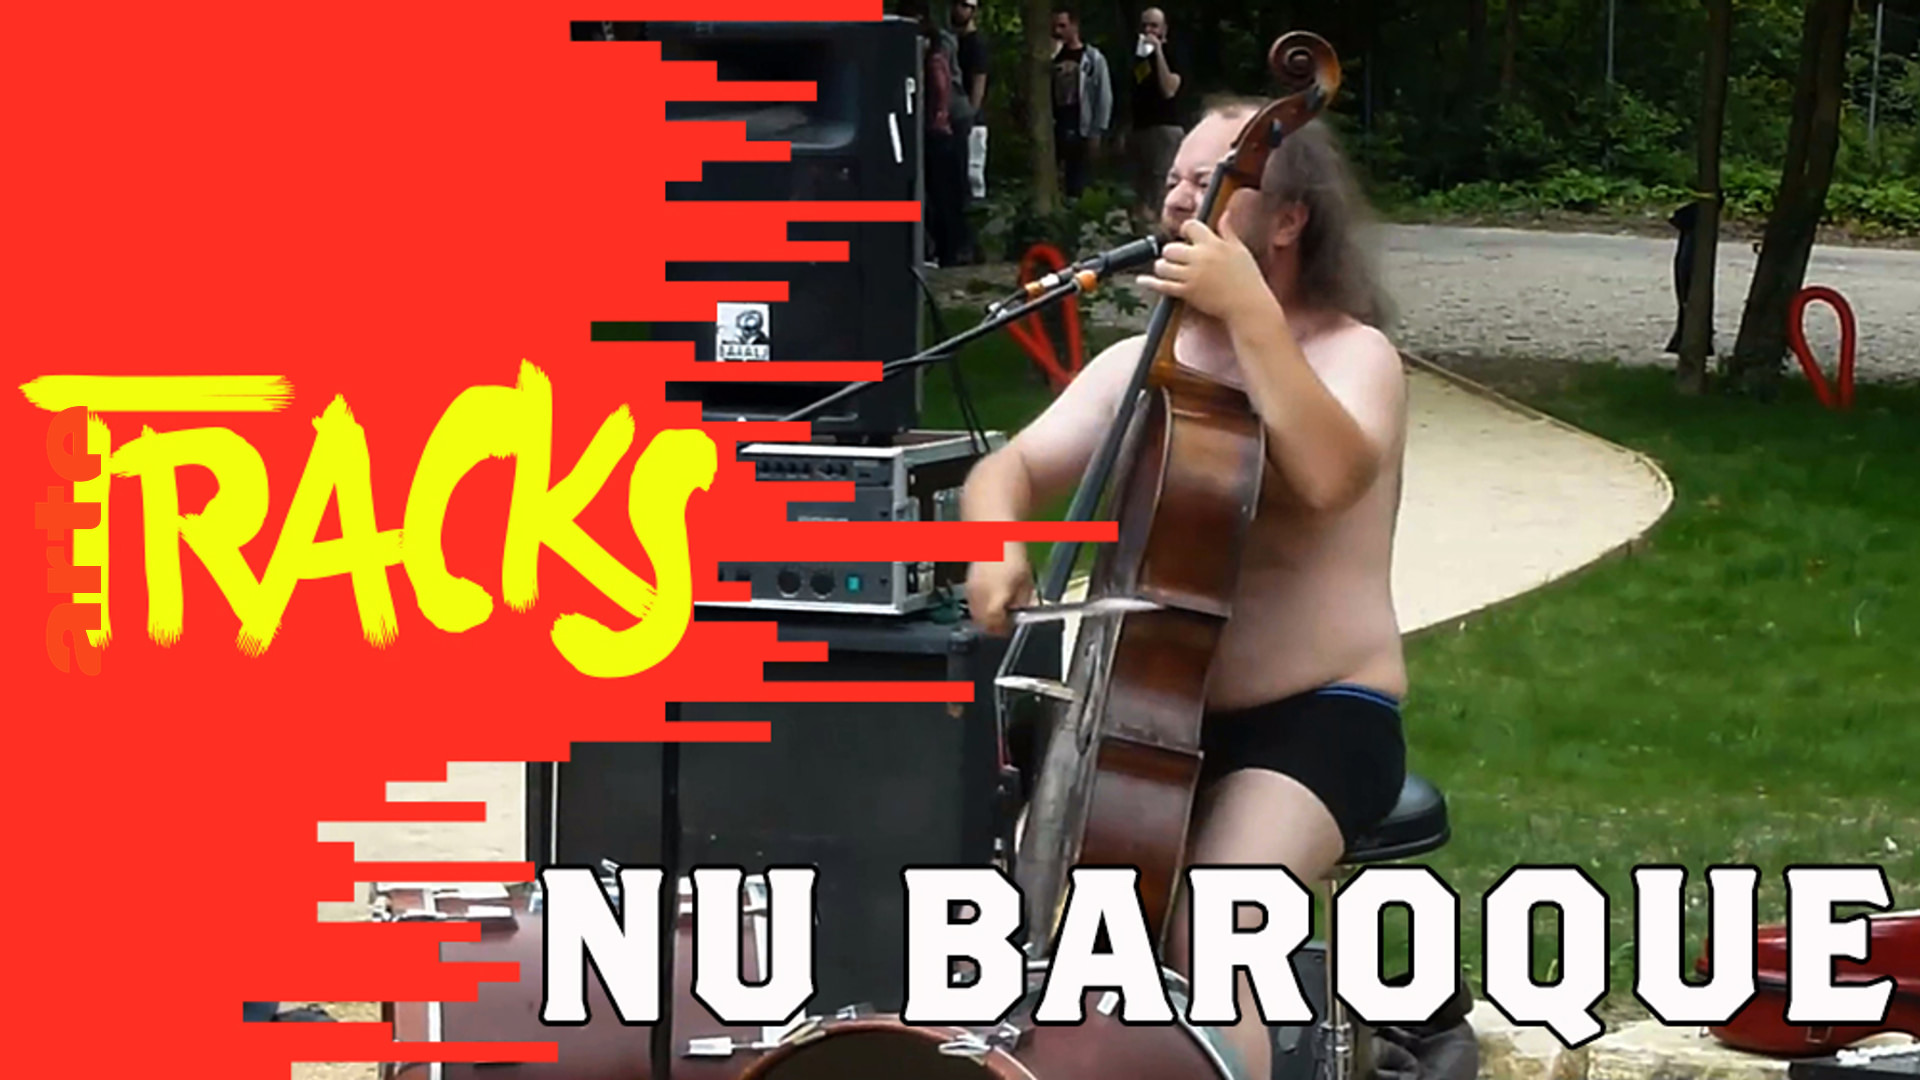 Nu Baroque: Bach to the future | TRACKS